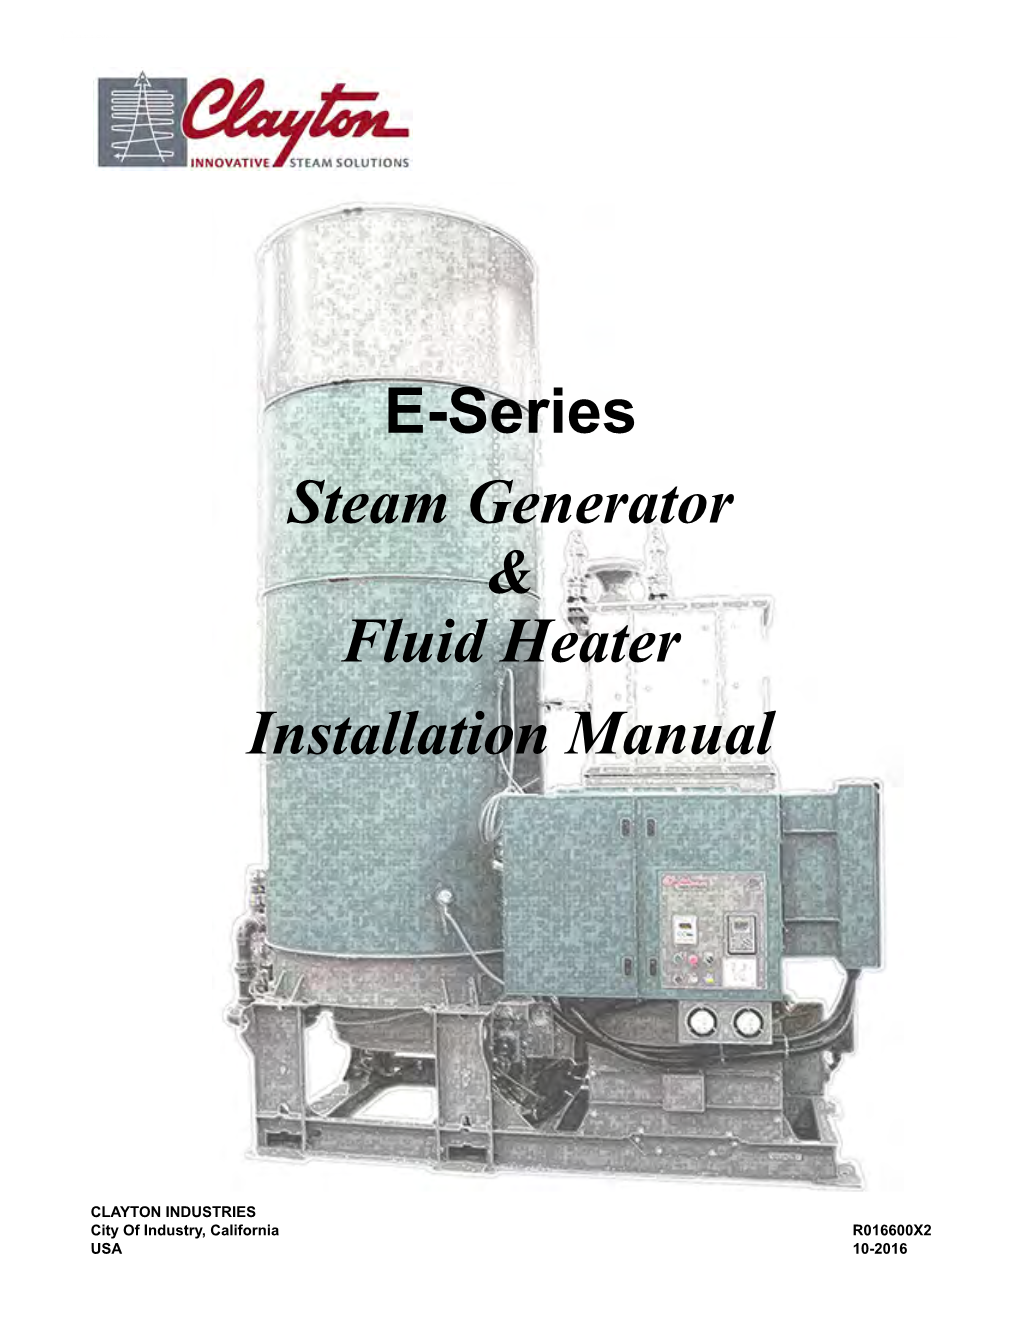 Steam Generator Installation Manual Fluid Heater & E-Series